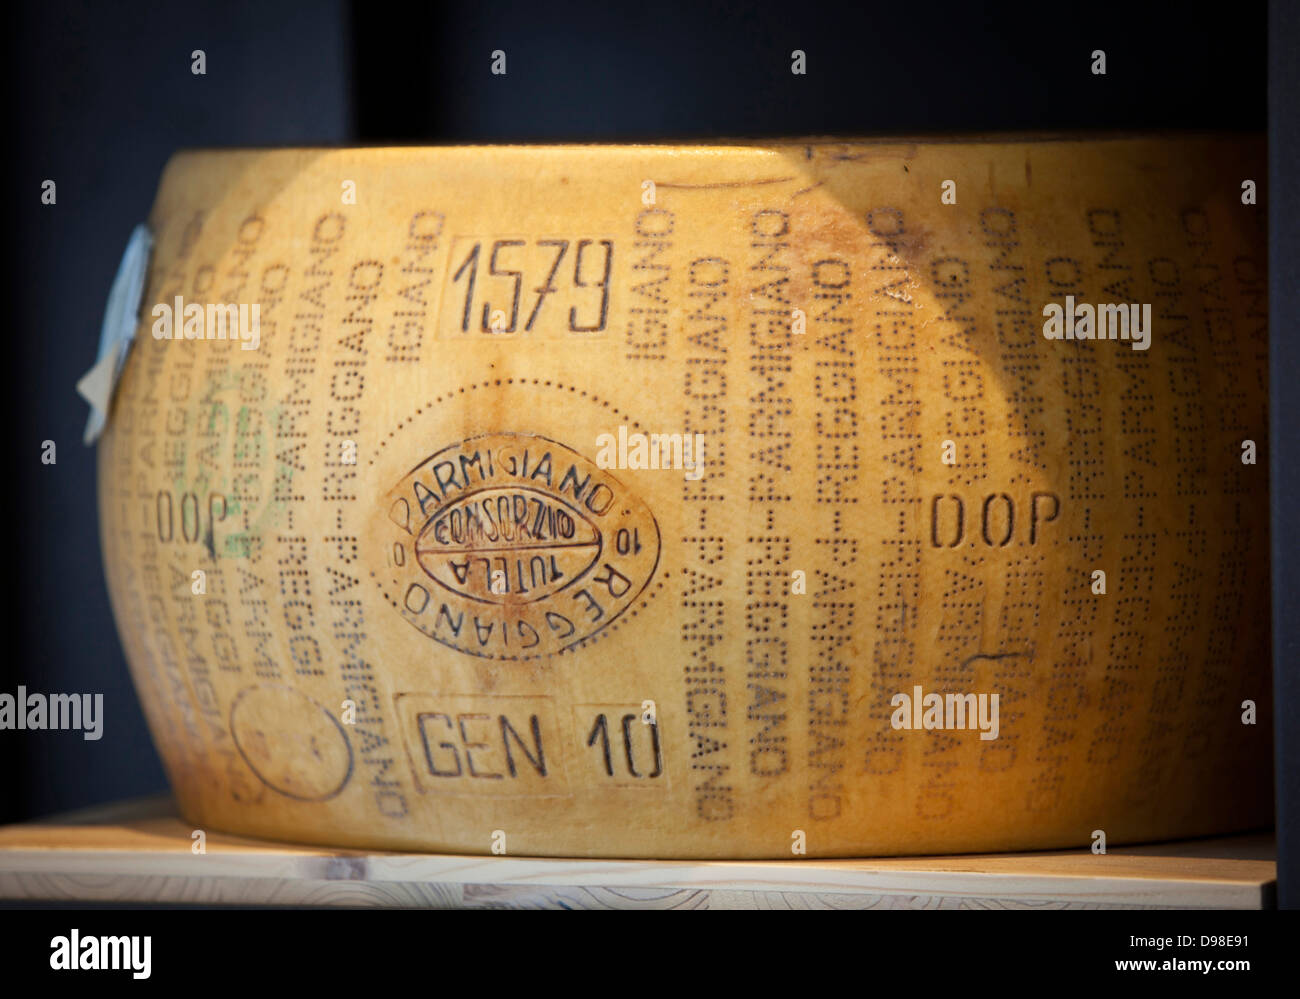 Wheel Of Parmesan Cheese Stock Photo